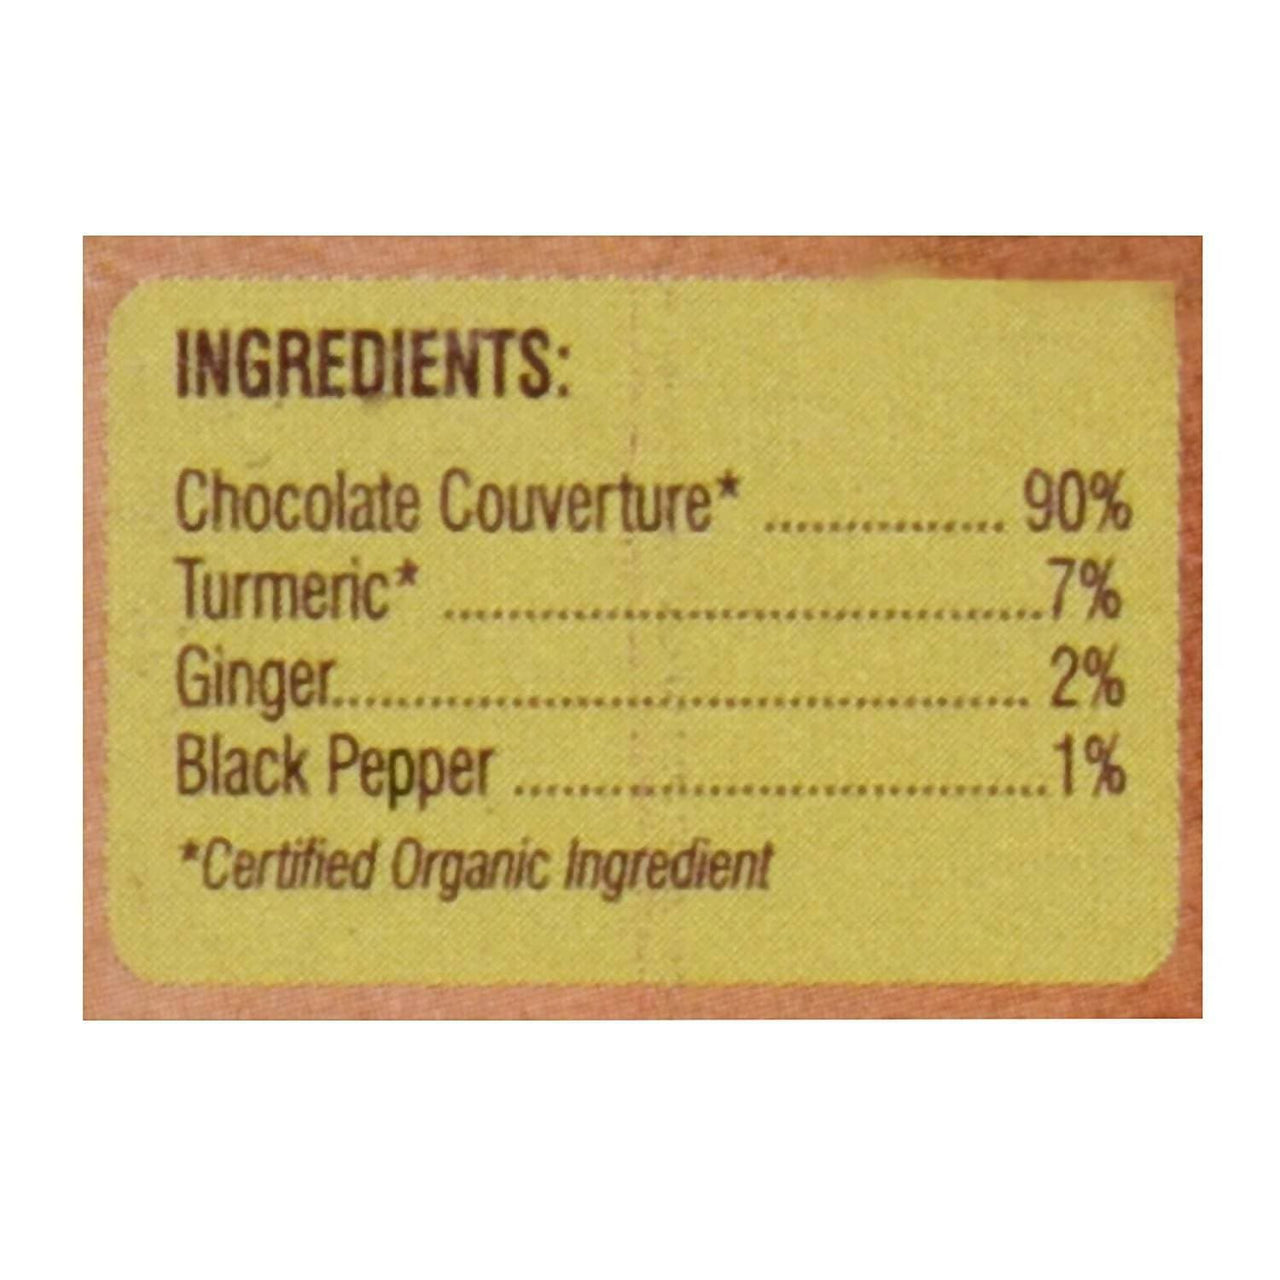 Organic Wellness Ow'zeal Turmeric Chocolate